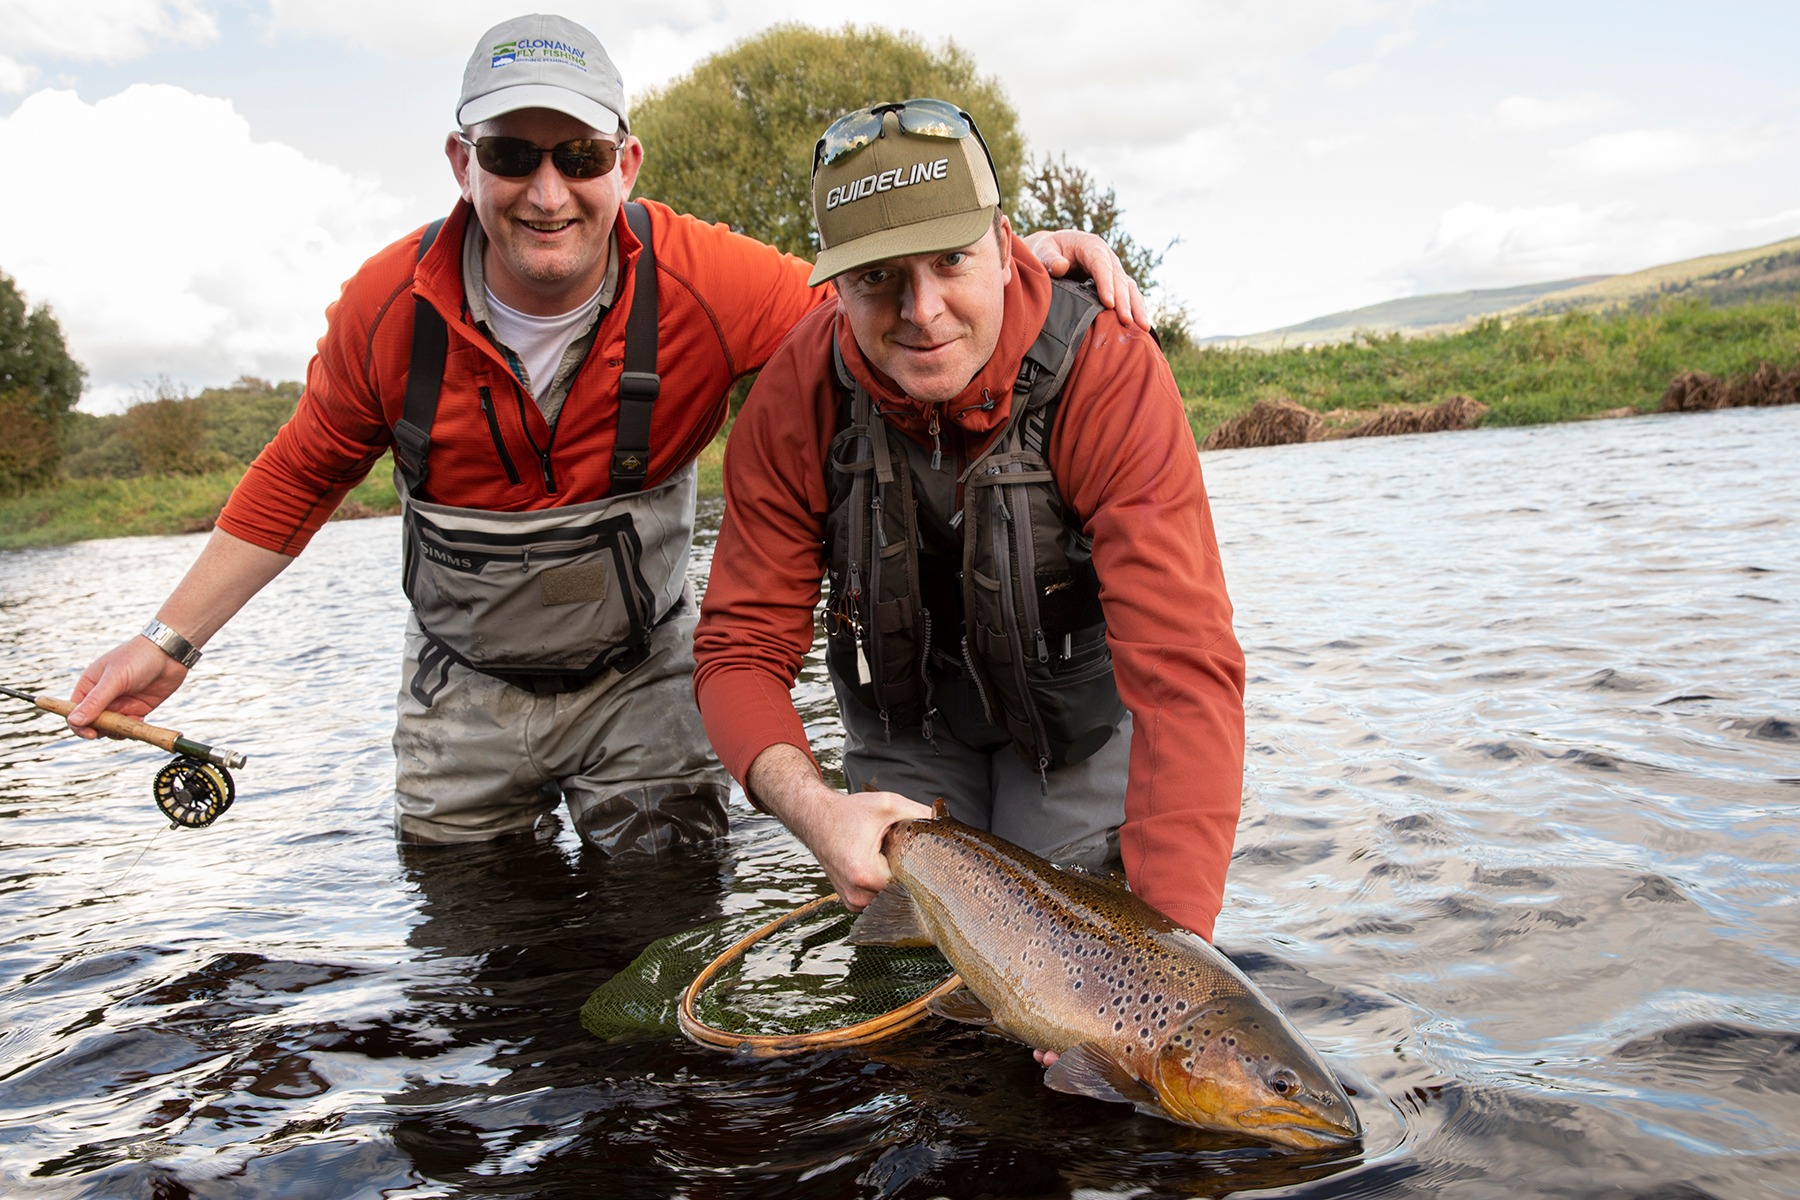 Clonanav Fly Fishing - The best river fishing in Ireland! 